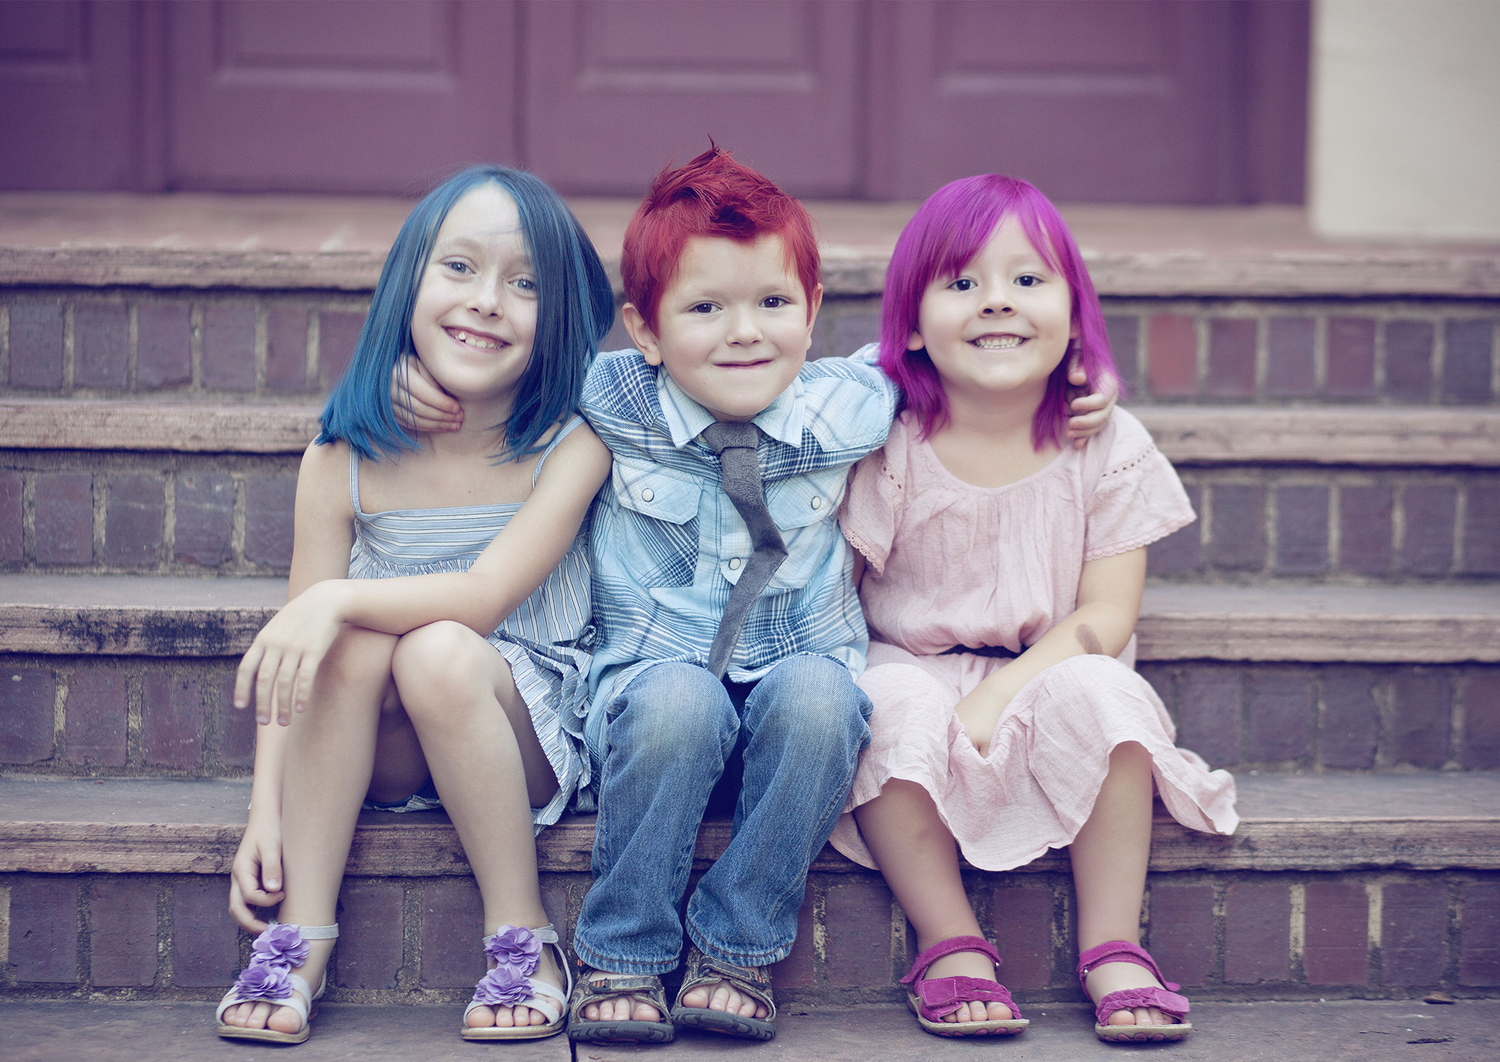 American College of Pediatrics reaches decision: Transgenderism of children is child abuse